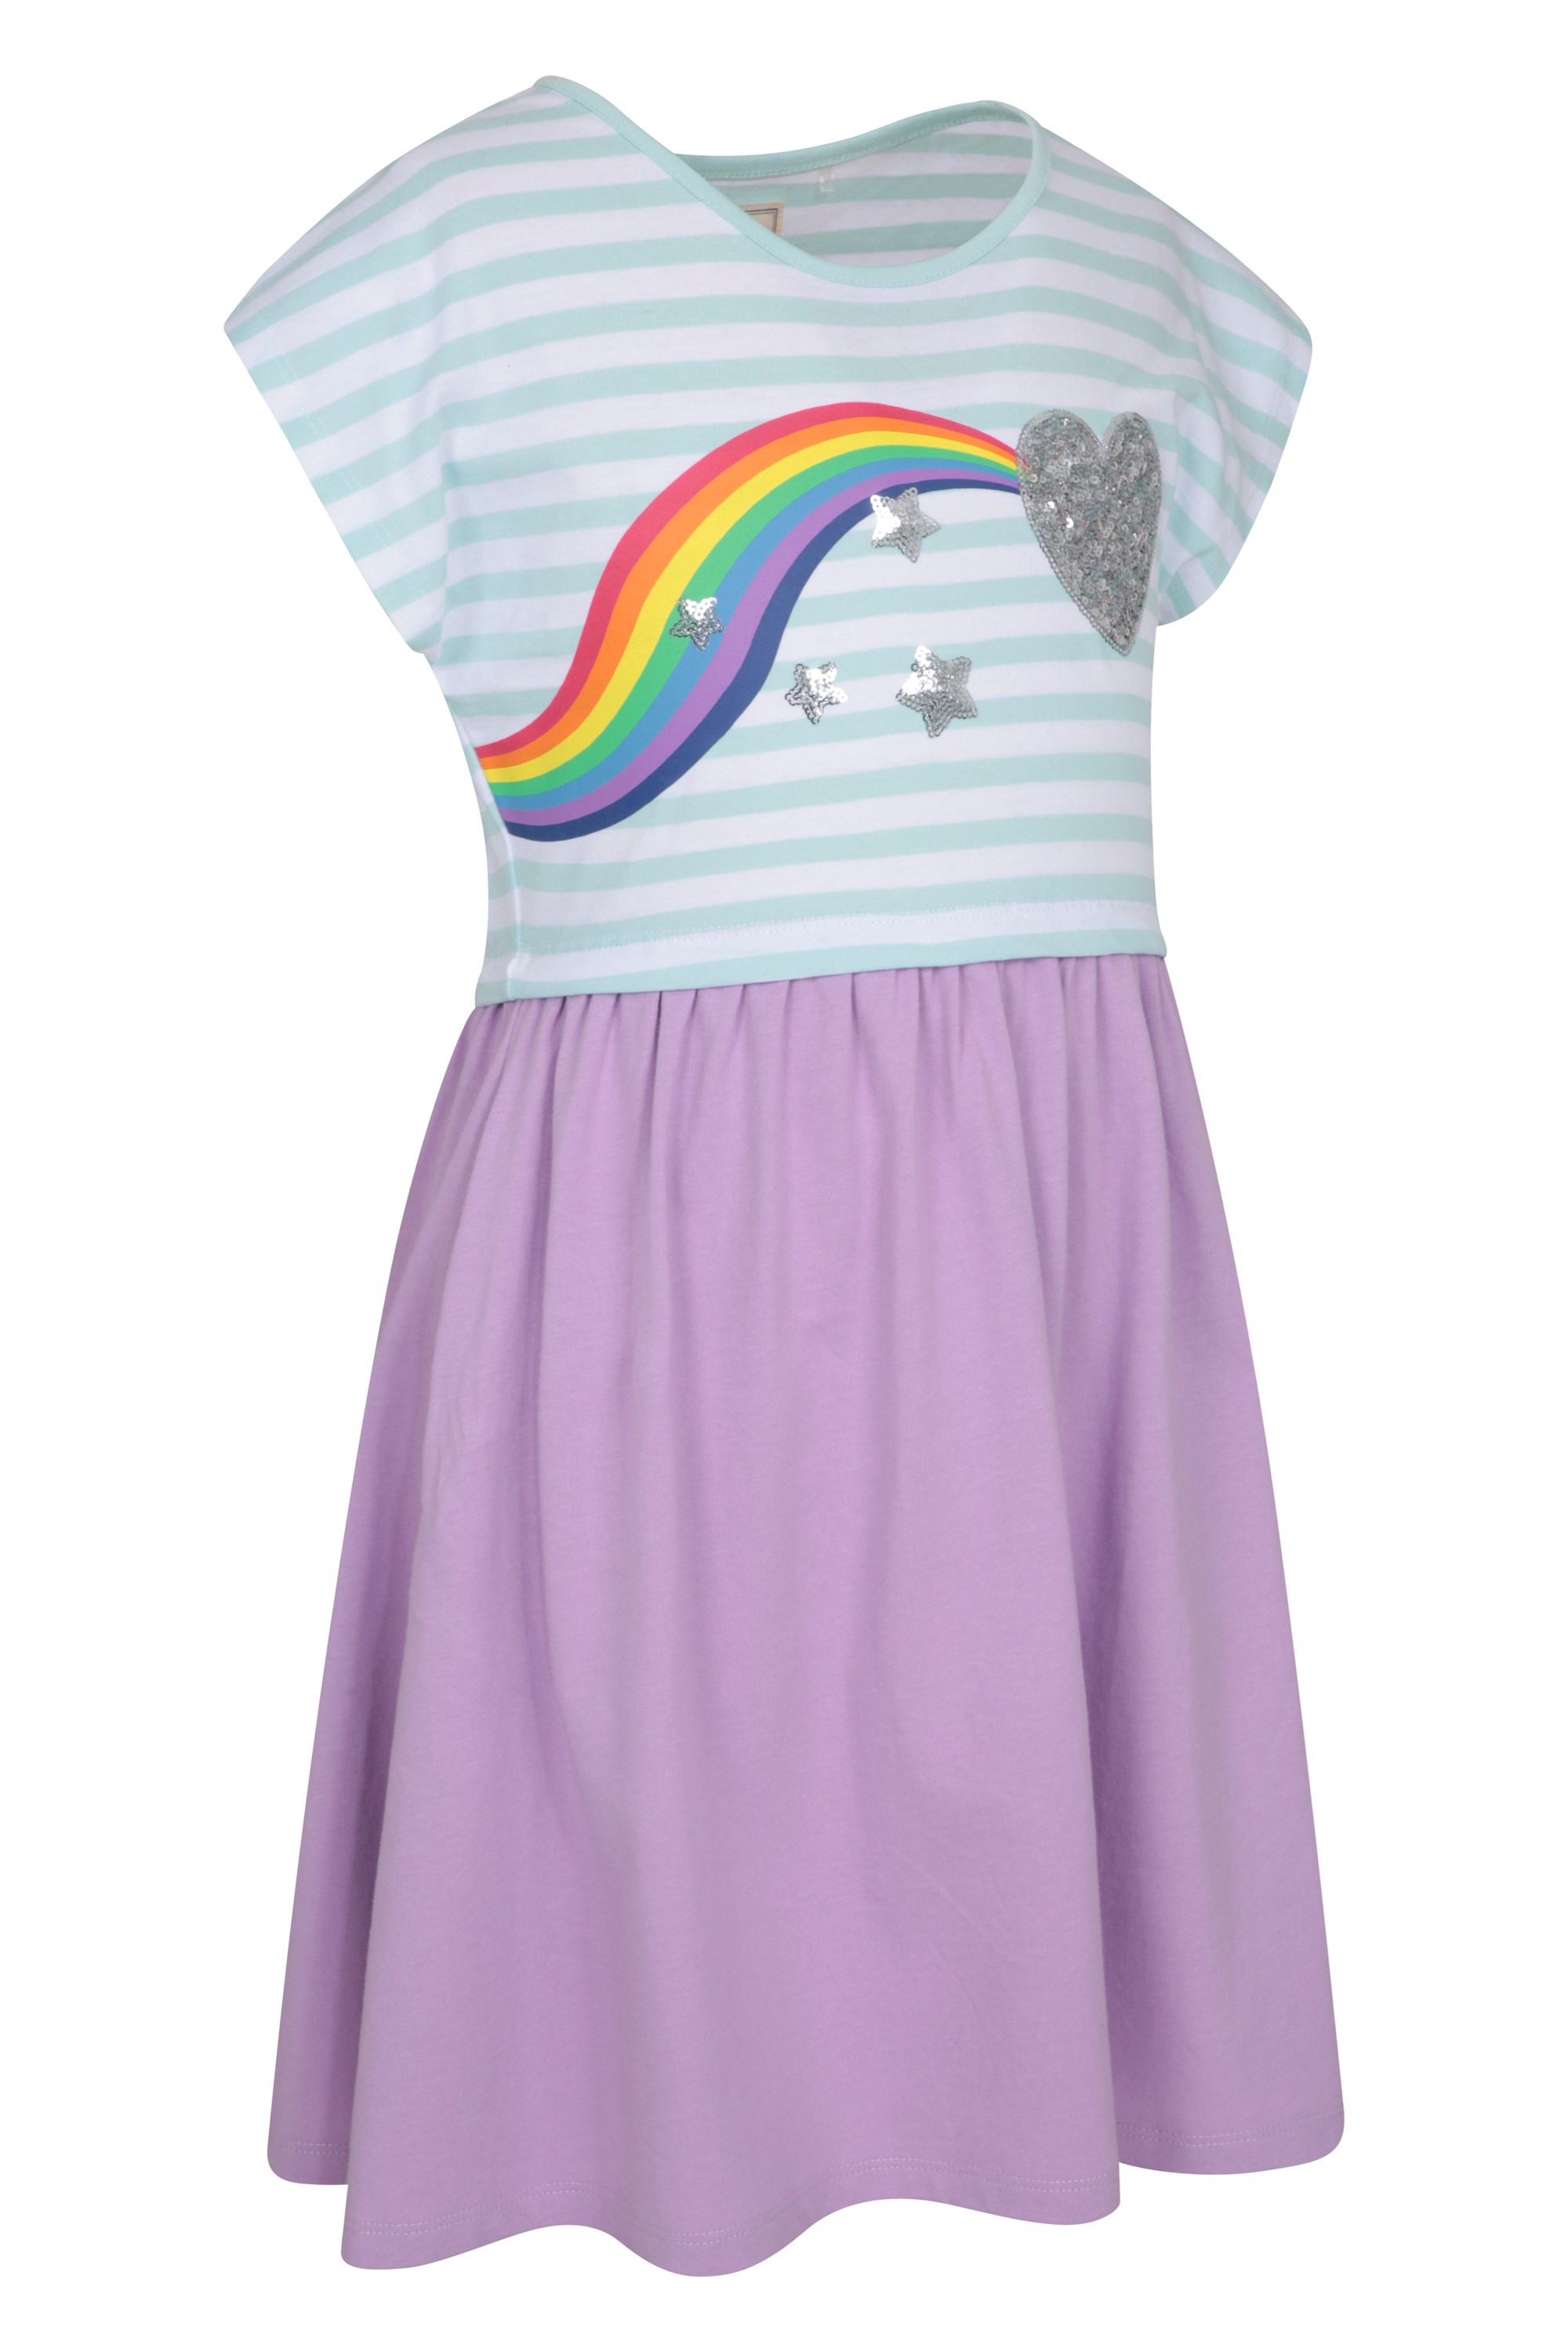 Mountain Warehouse Pippy Girls Dress 100% Cotton Kids Dress